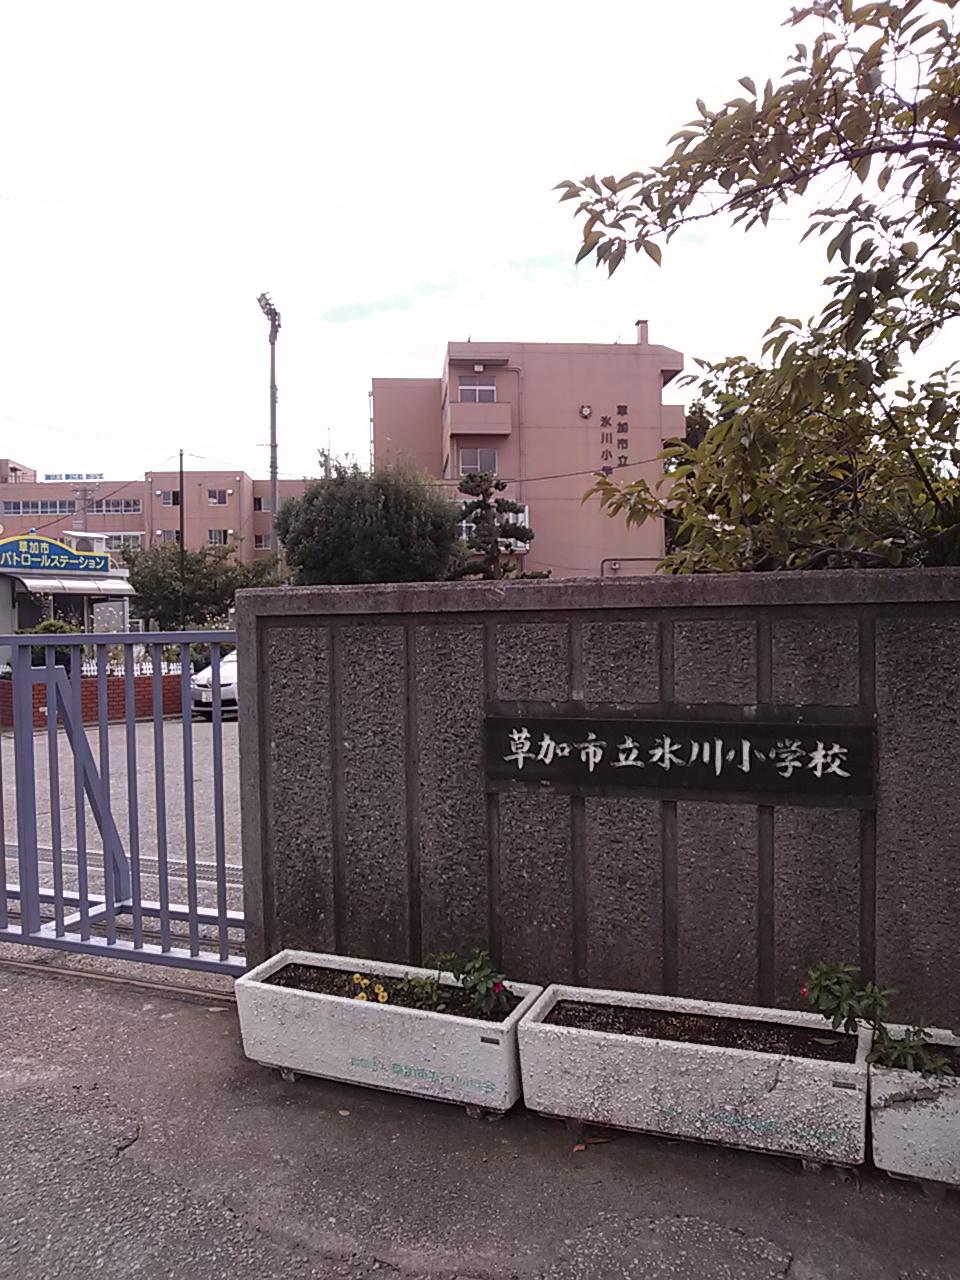 Primary school. Hikawa until elementary school 604m Hikawa Elementary School